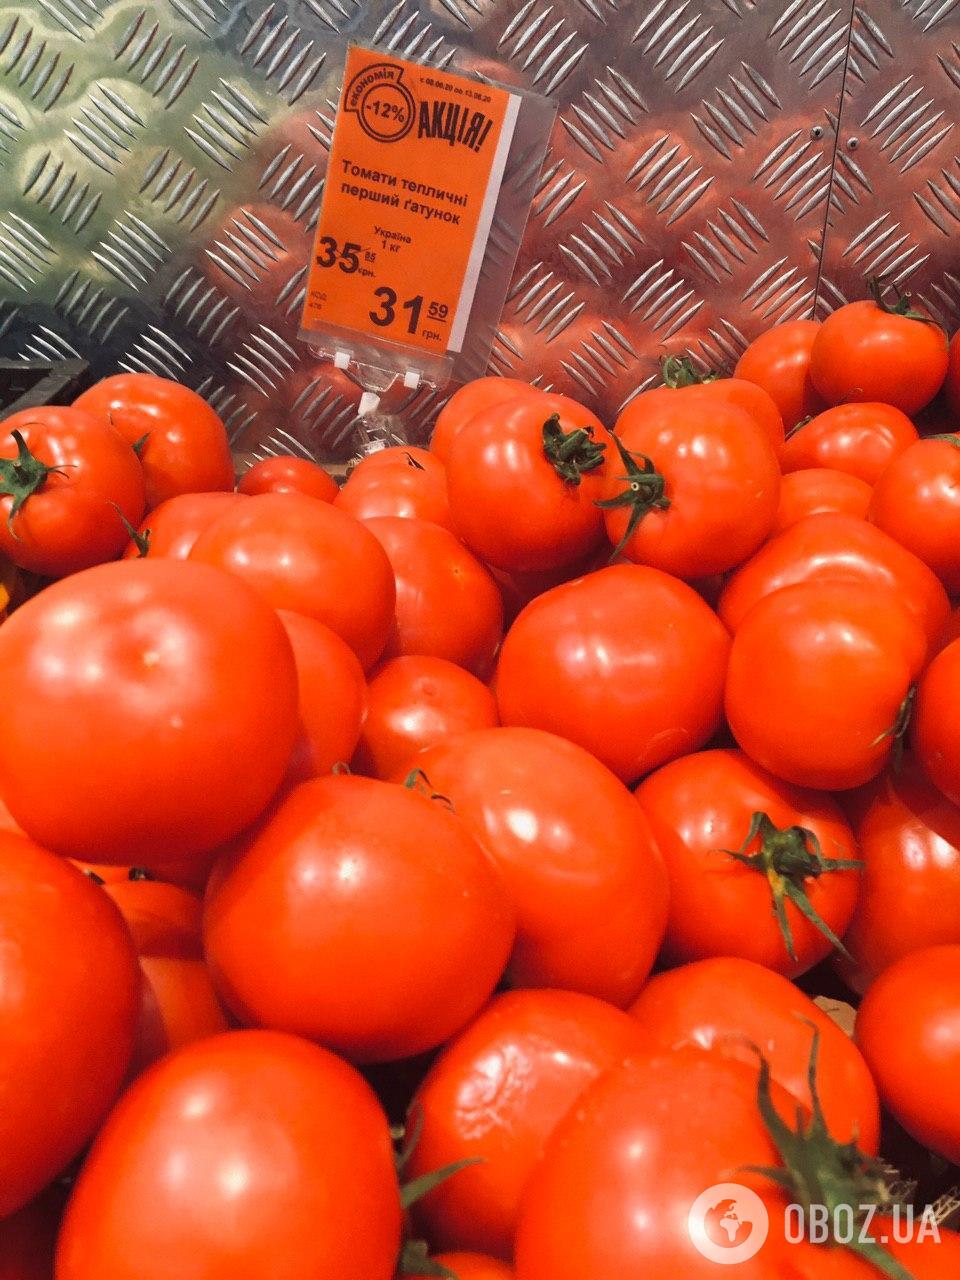 Минимальная цена на томаты в супермаркетах Днепра